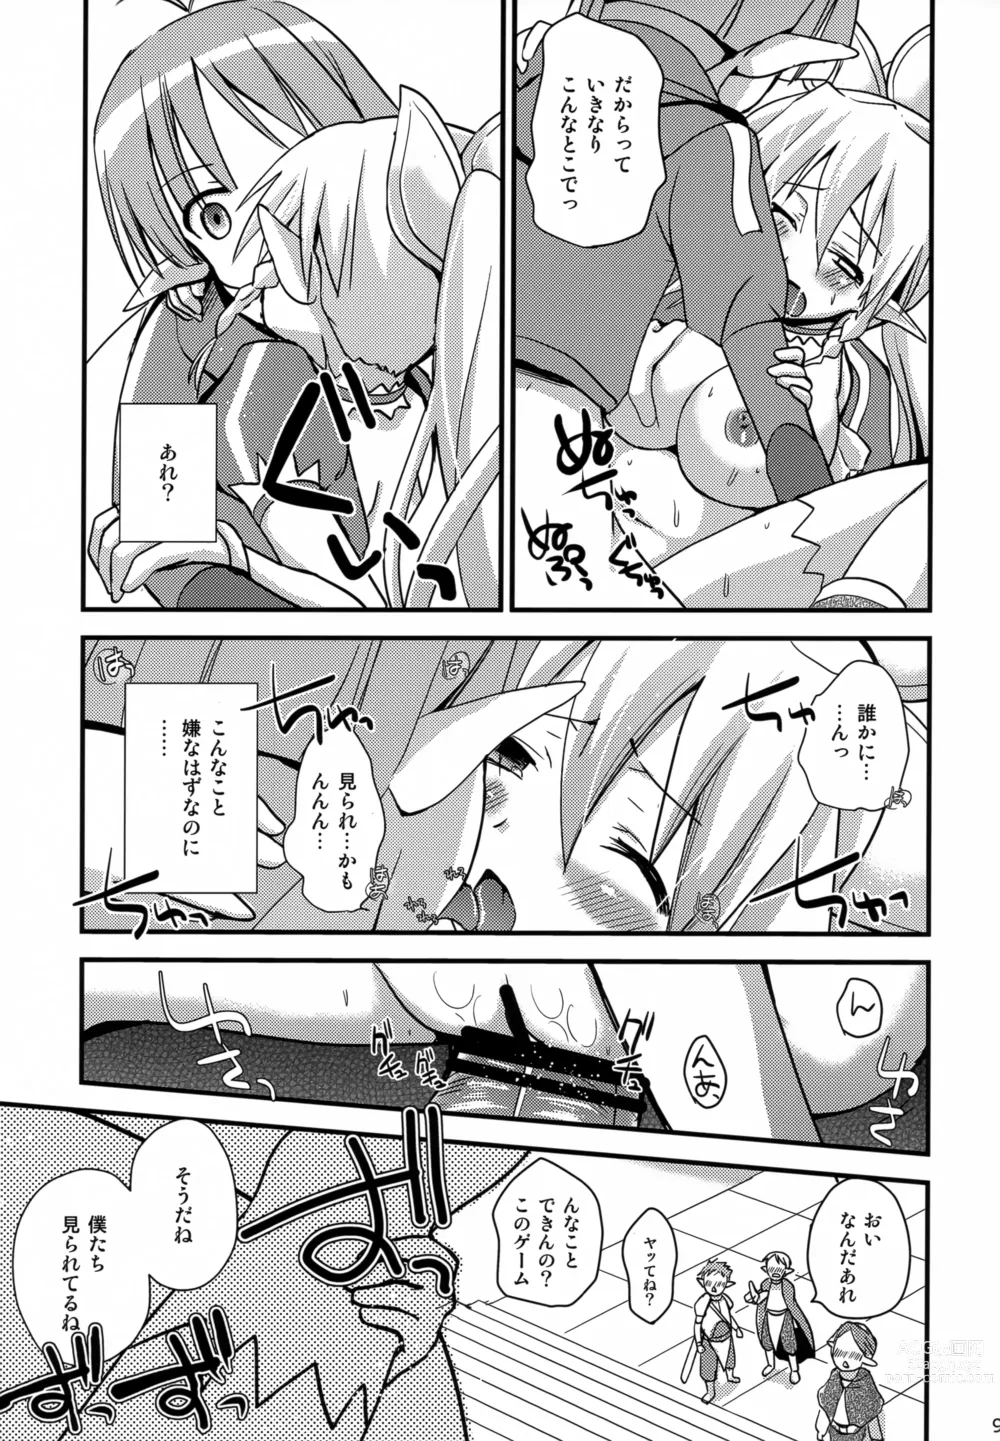 Page 8 of doujinshi Suguha Offline